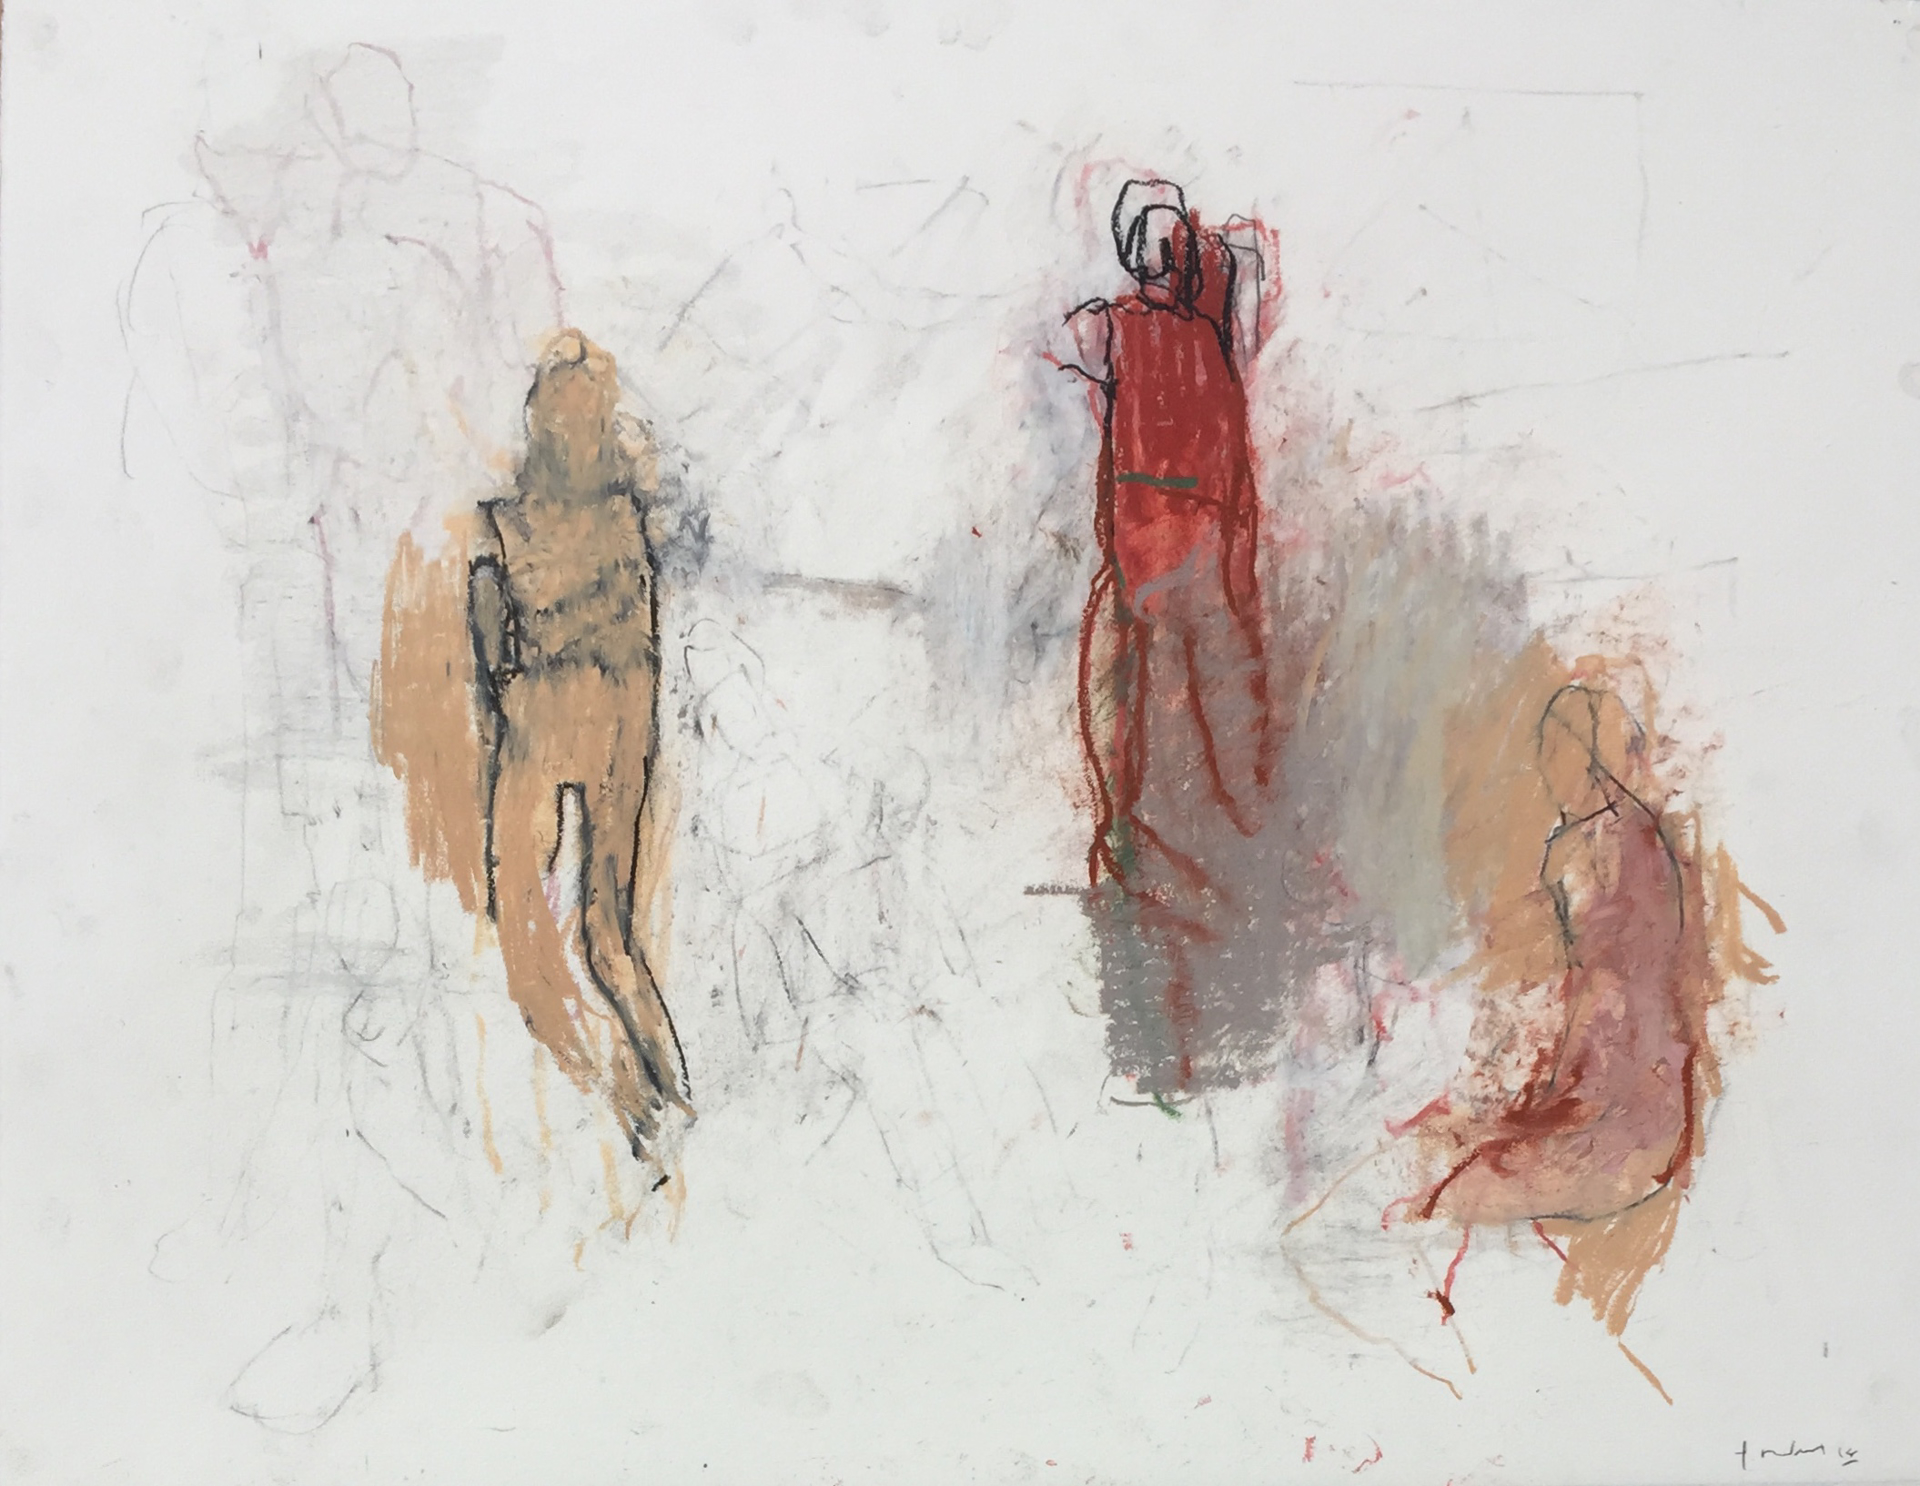 Three Figures, II by Thaddeus Radell